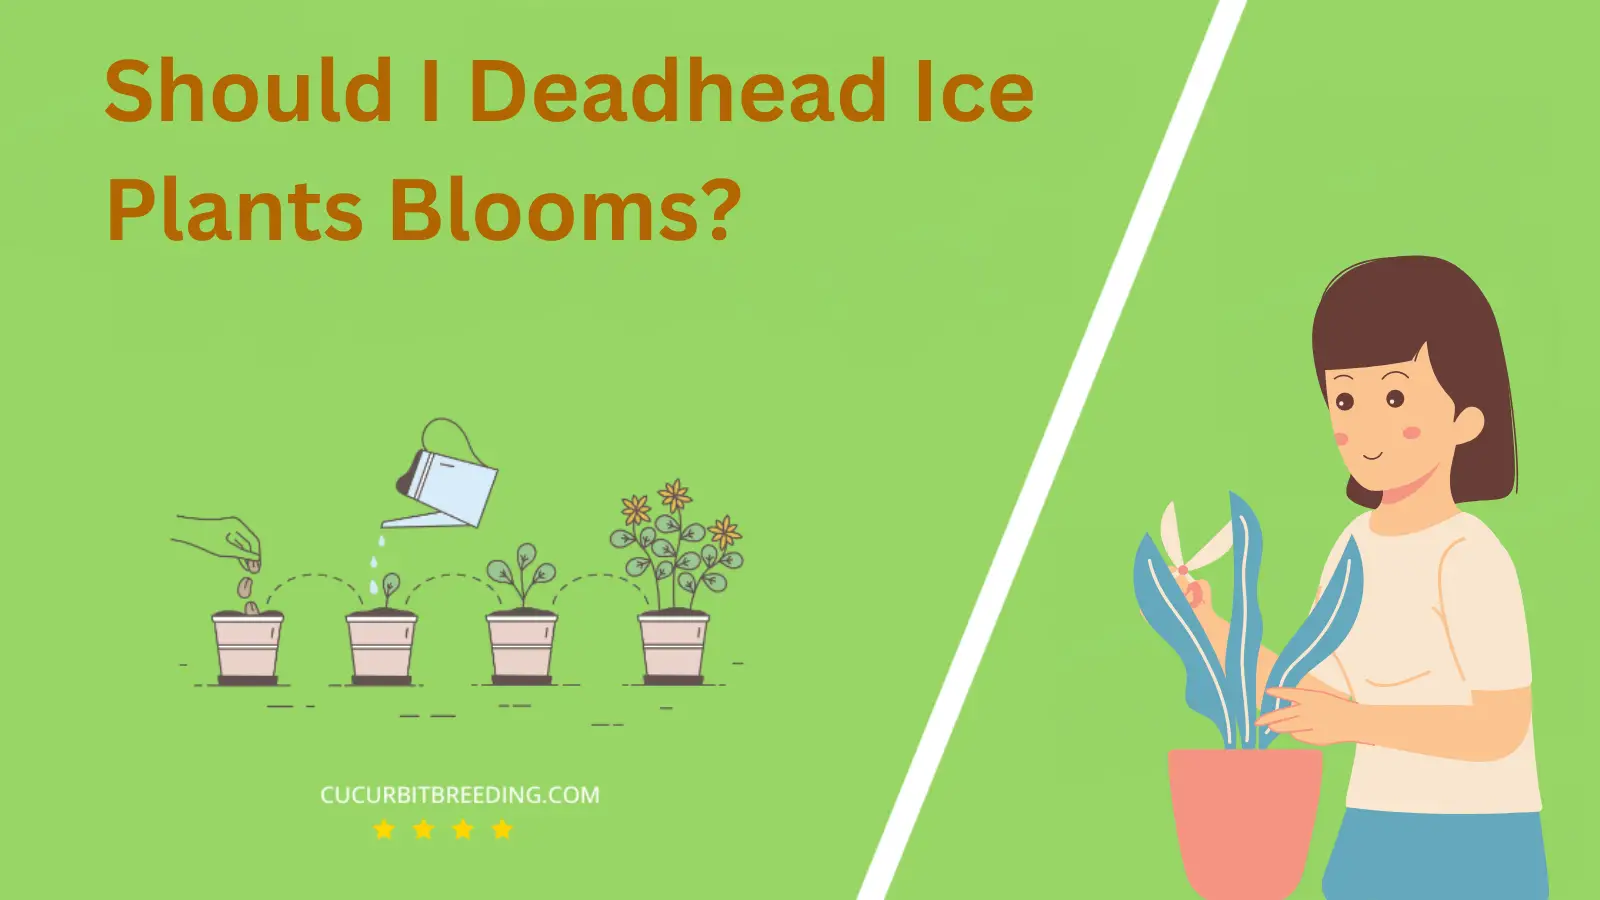 Should I Deadhead Ice Plants Blooms?